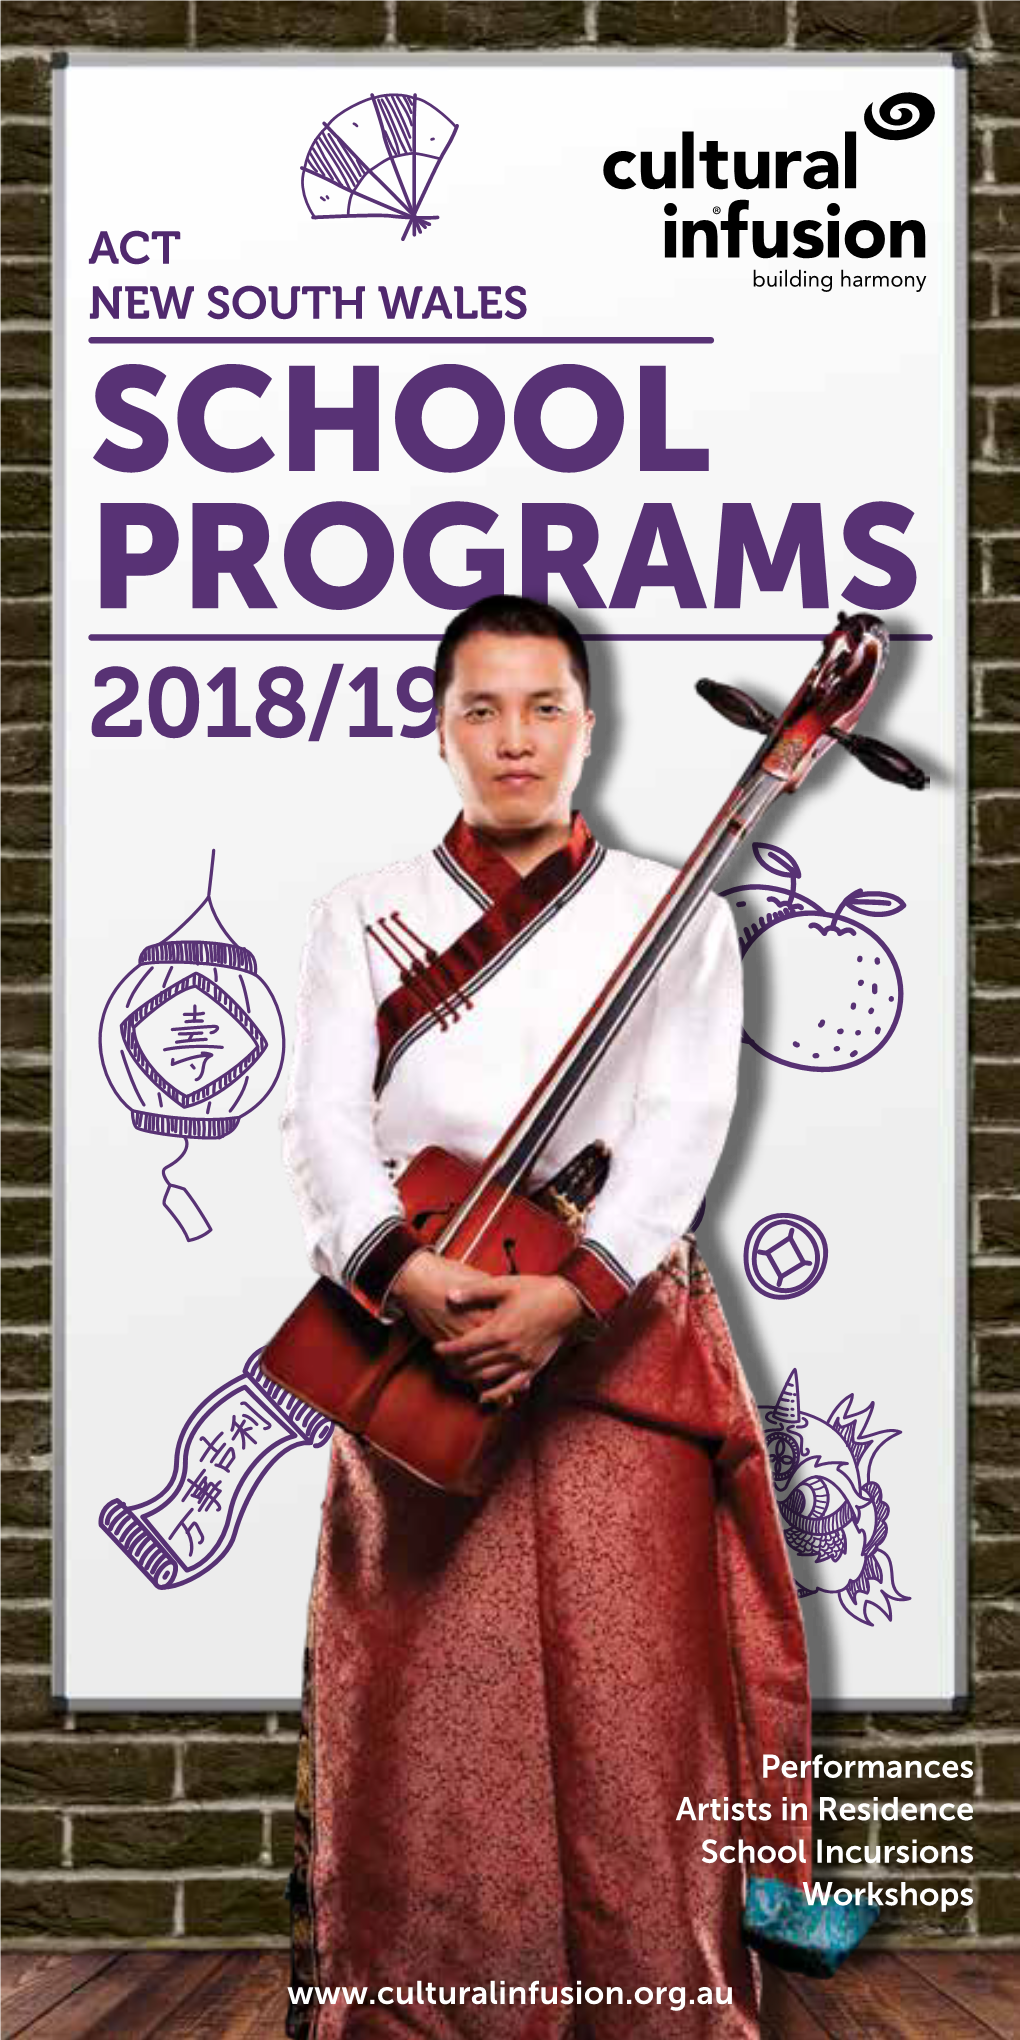 School Programs 2018/19